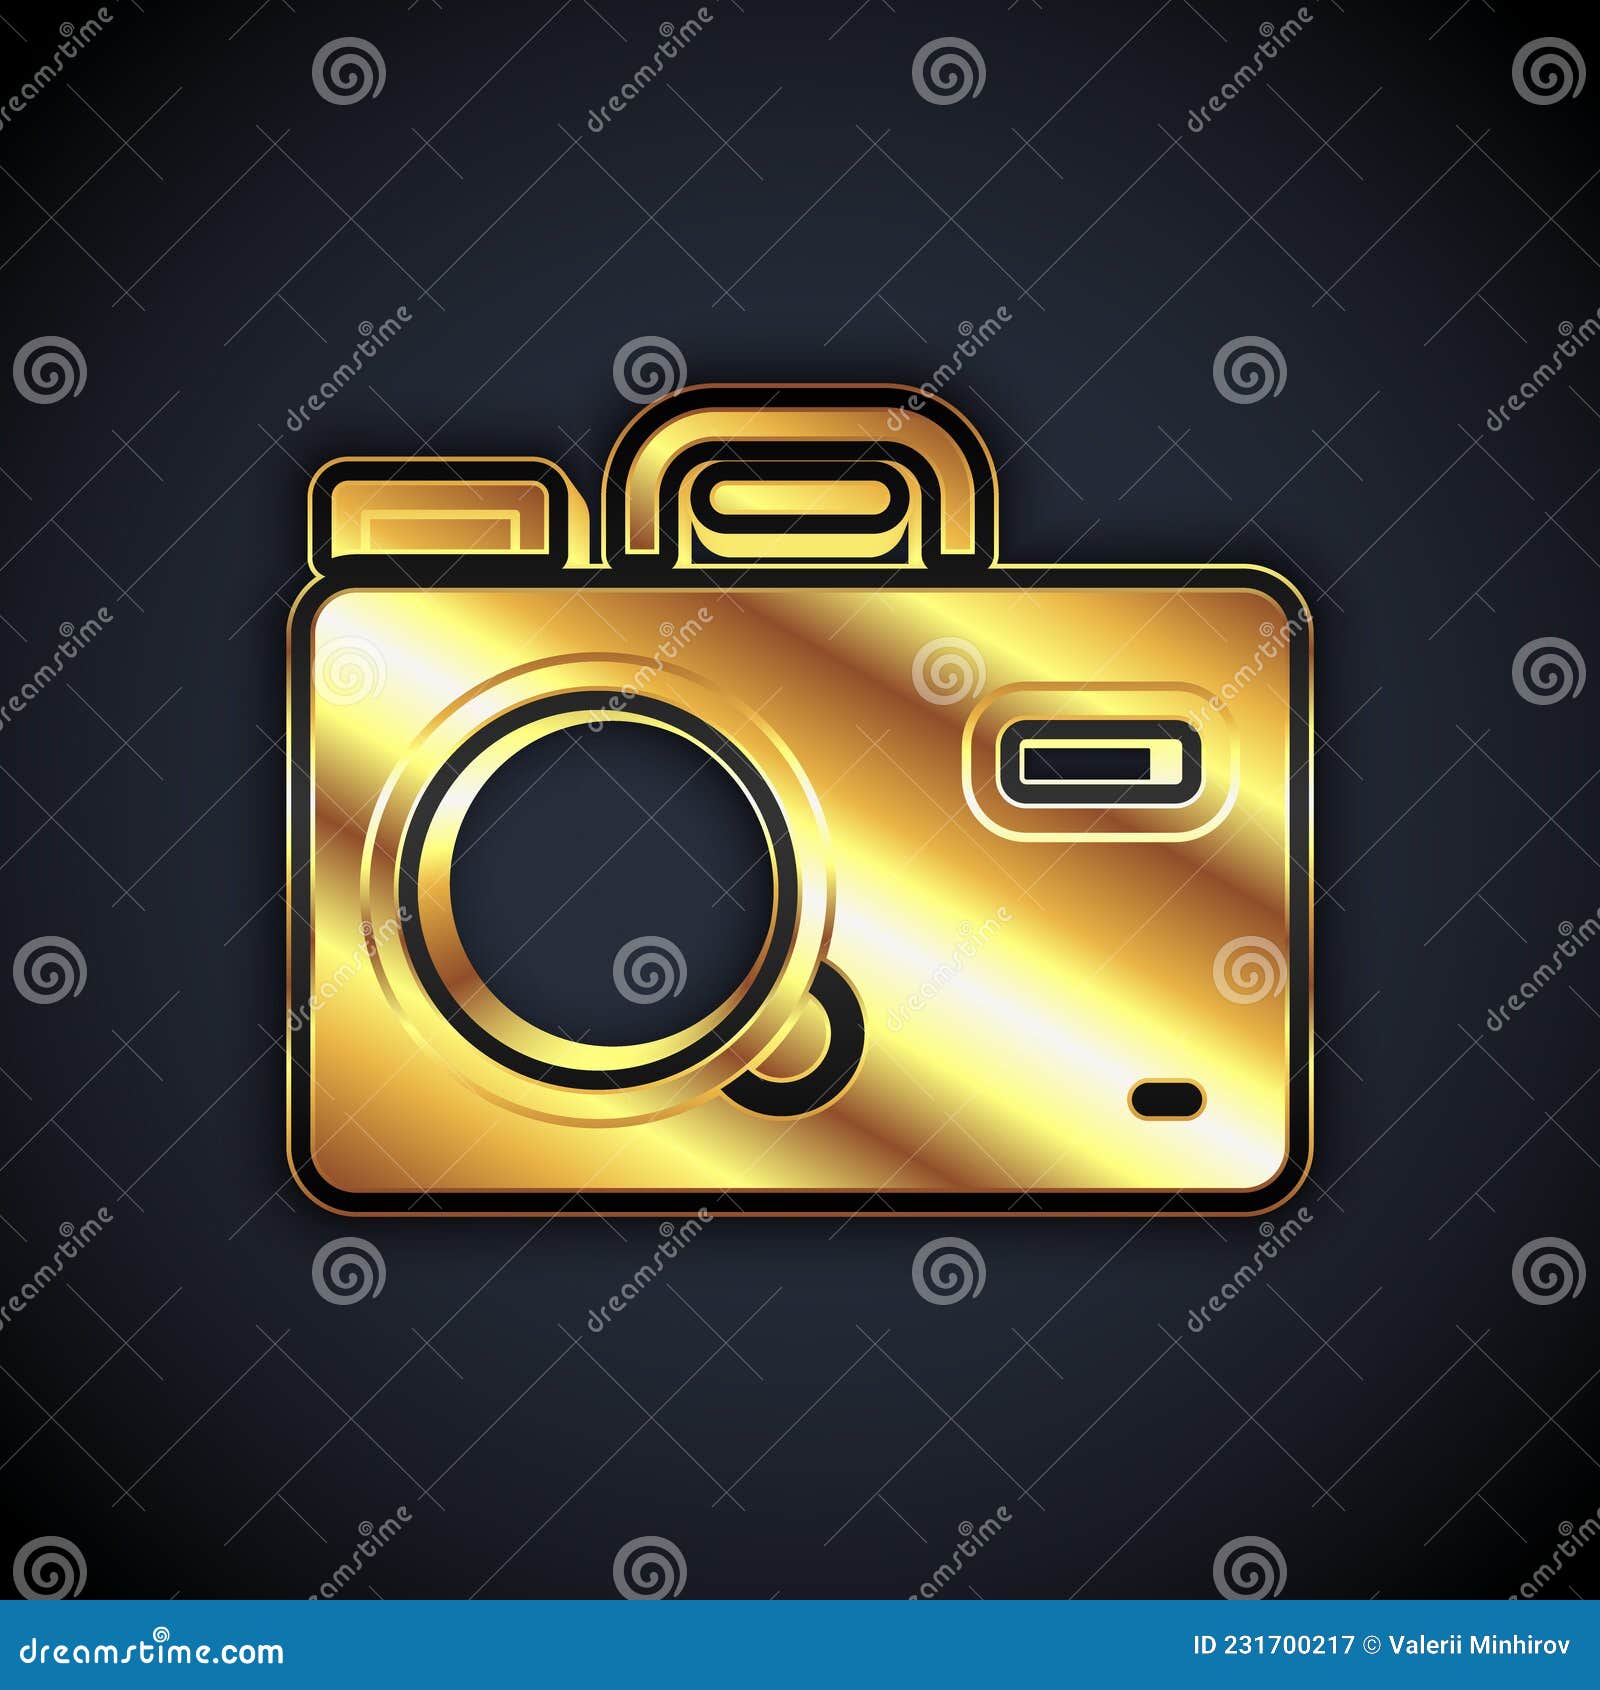 Gold Photo Camera Icon Isolated on Black Background. Foto Camera. Digital  Photography Stock Vector - Illustration of frame, symbol: 231700217